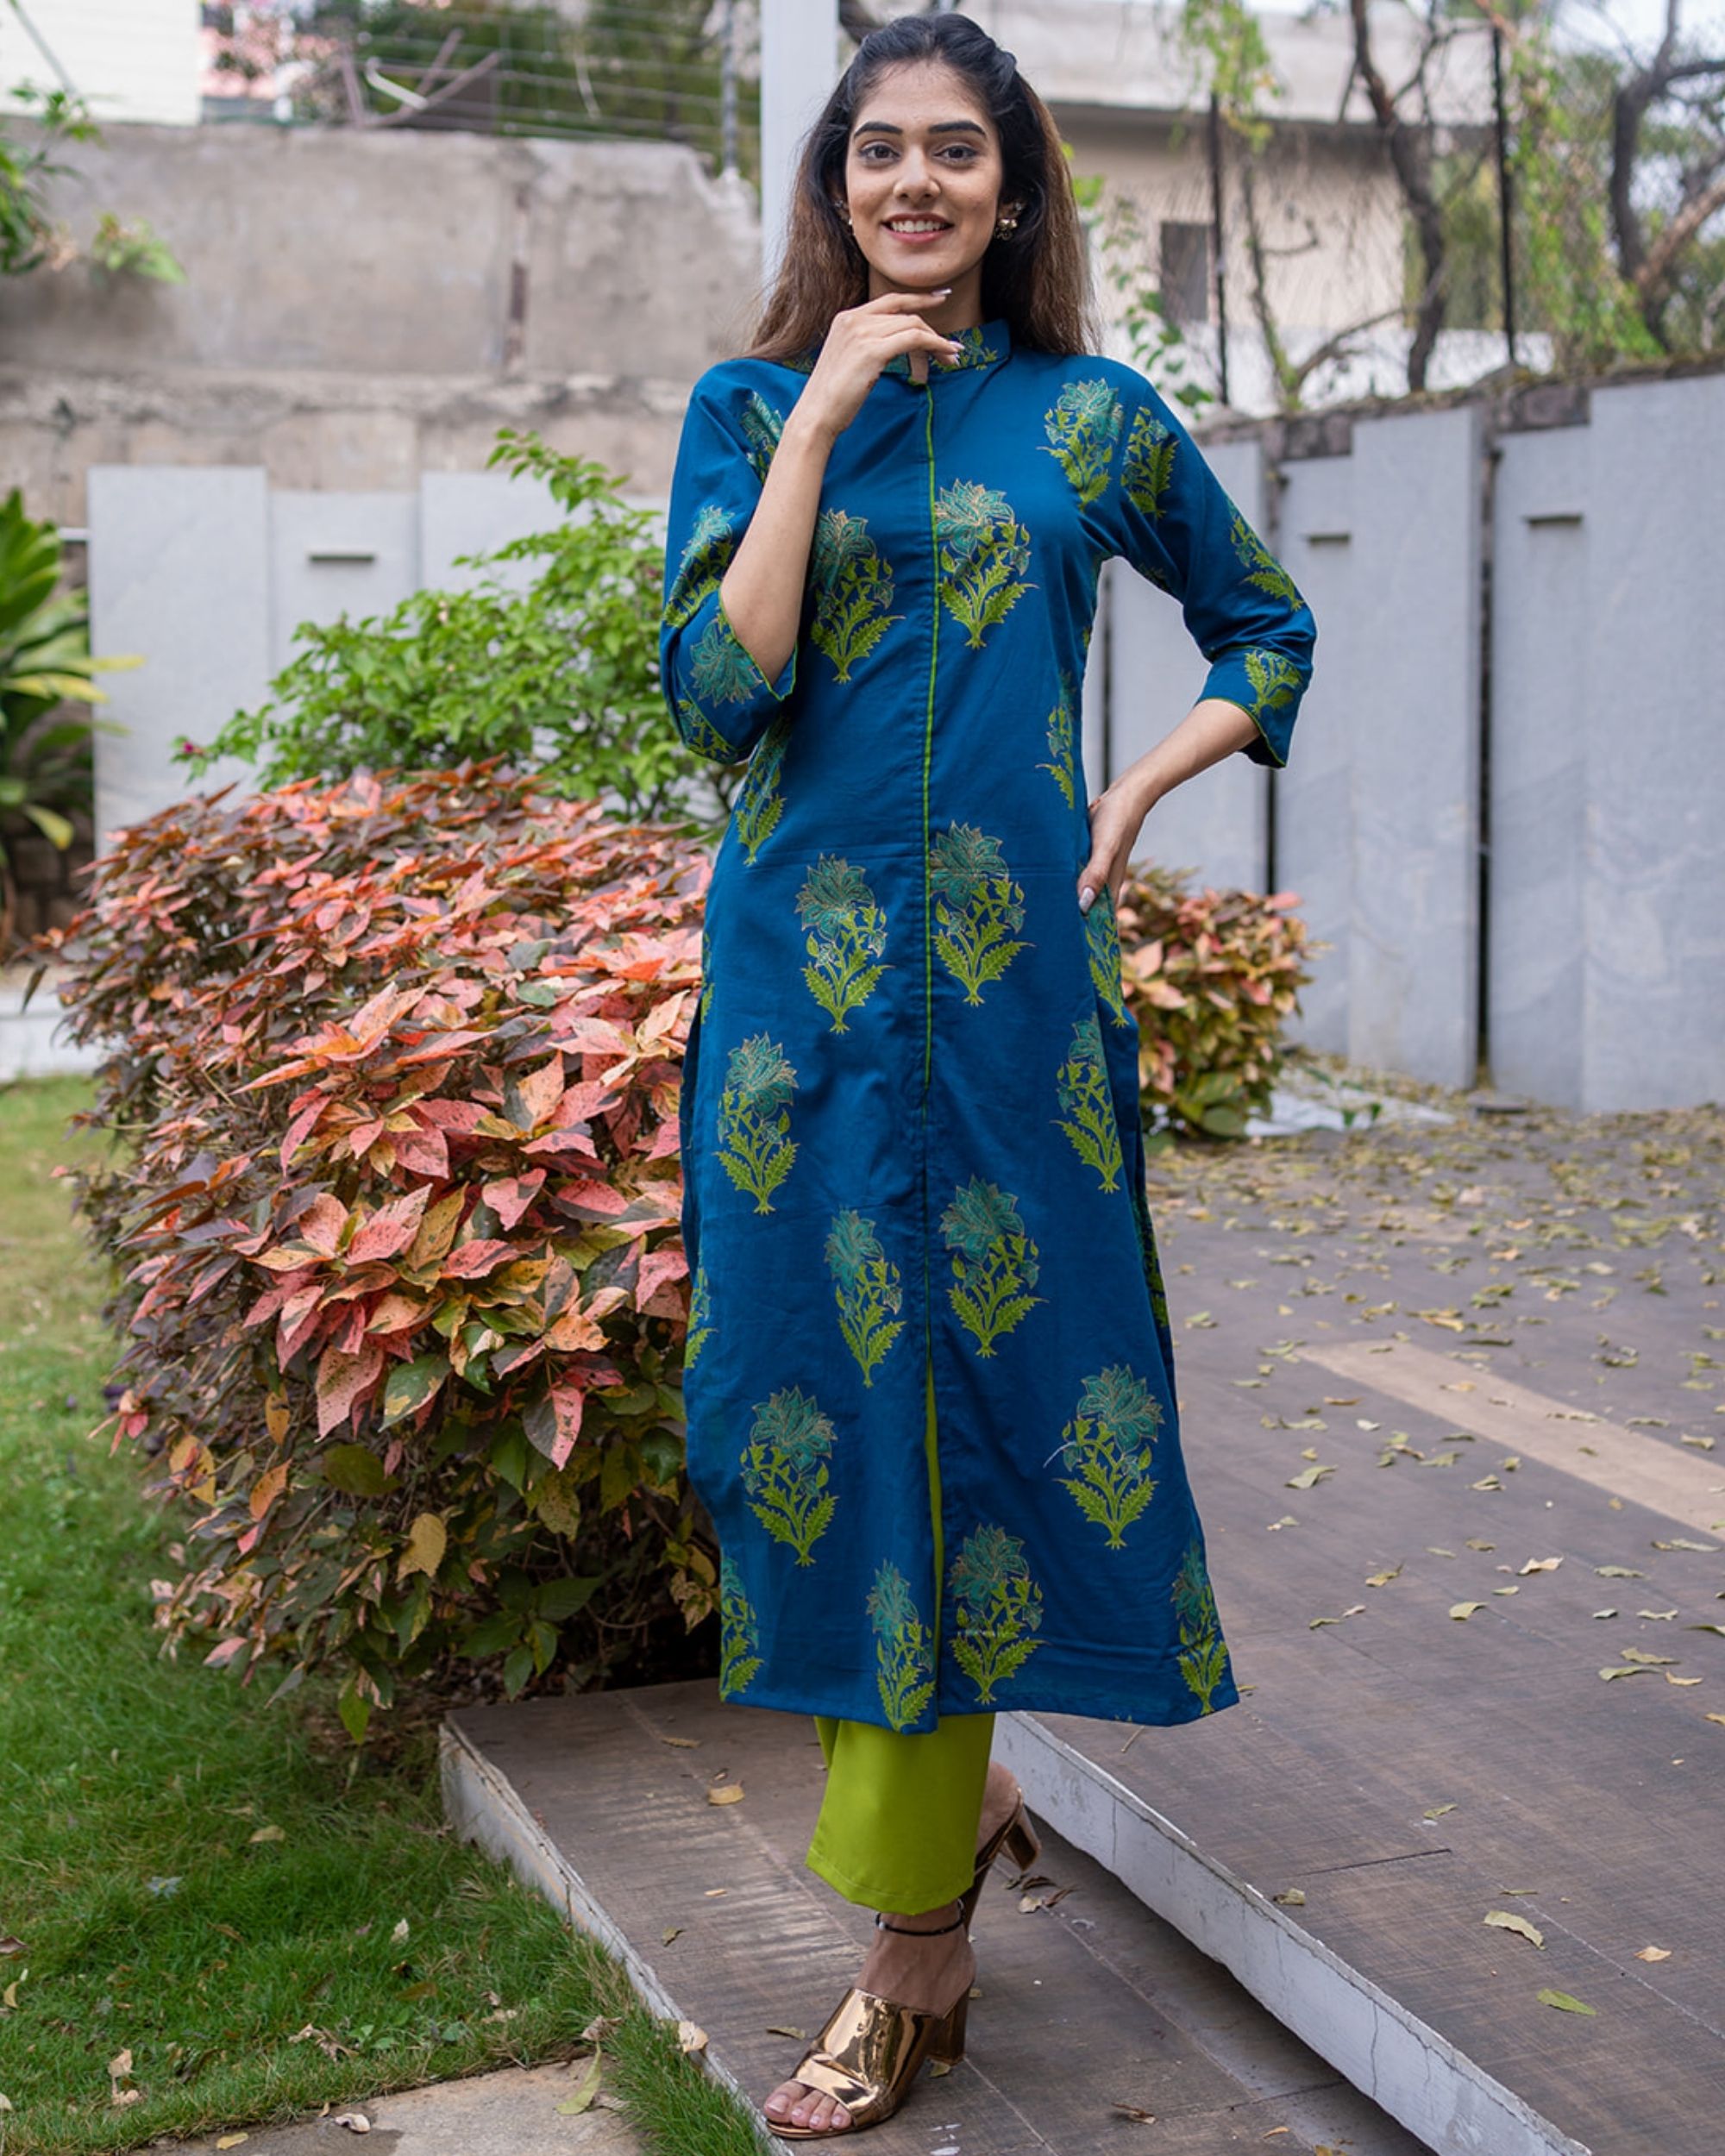 Buy Dollar Missy Green Cotton Leggings for Women's Online @ Tata CLiQ